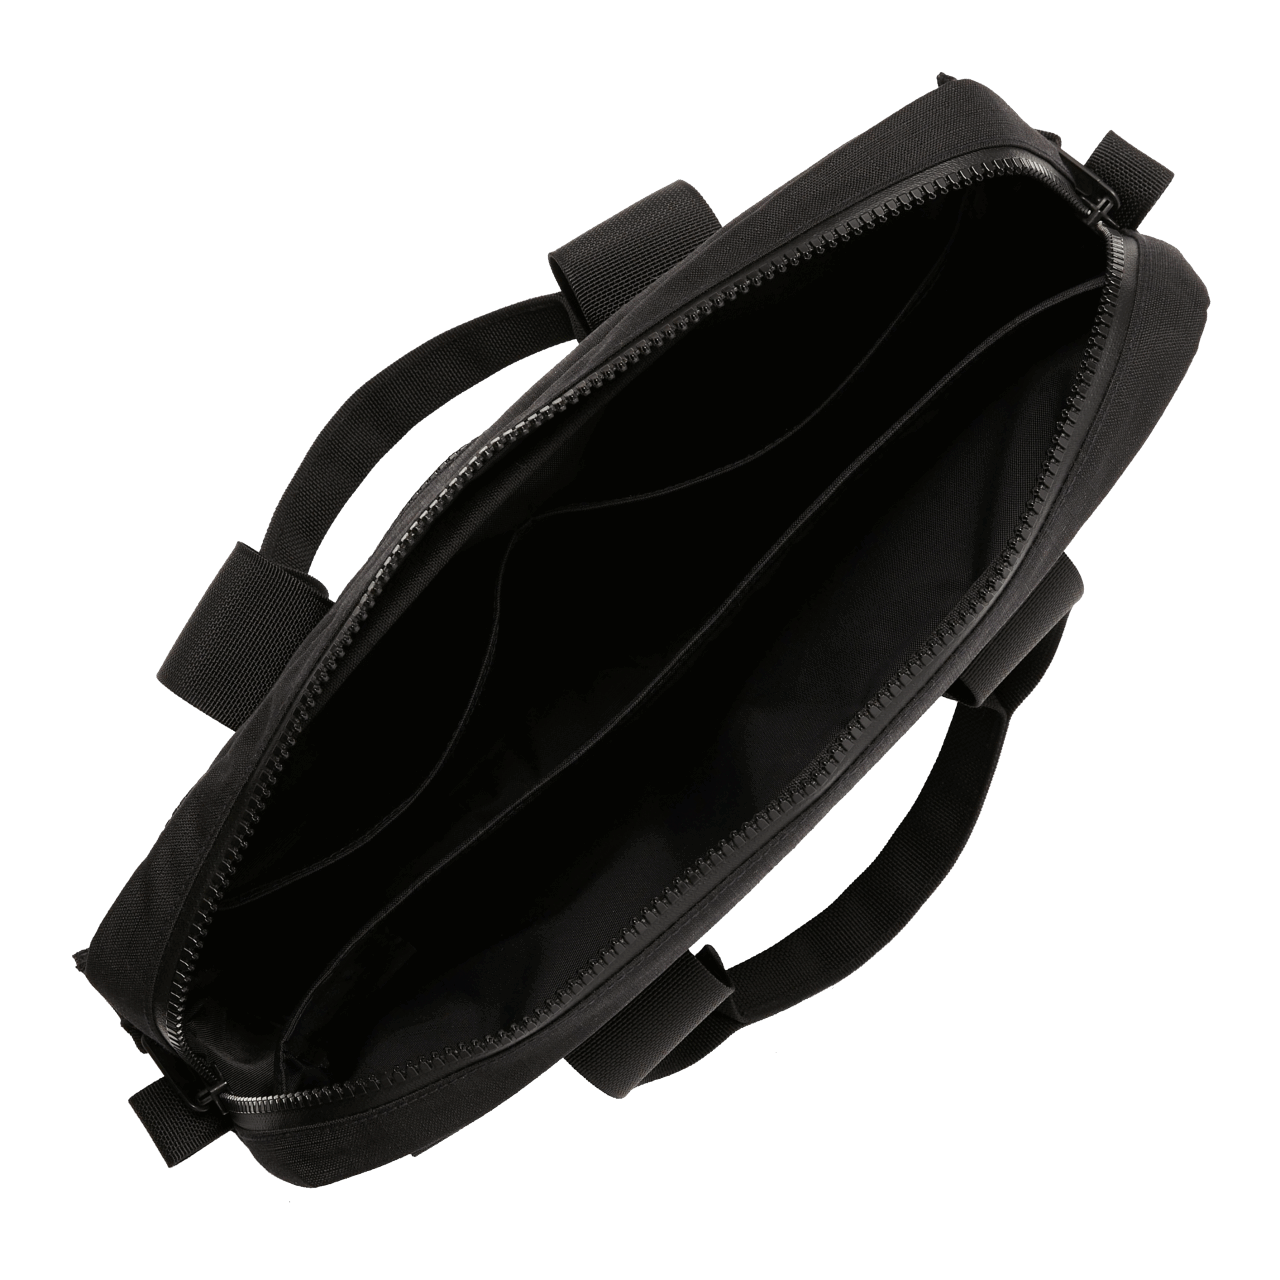 Filson Ripstop Compact Briefcase - black